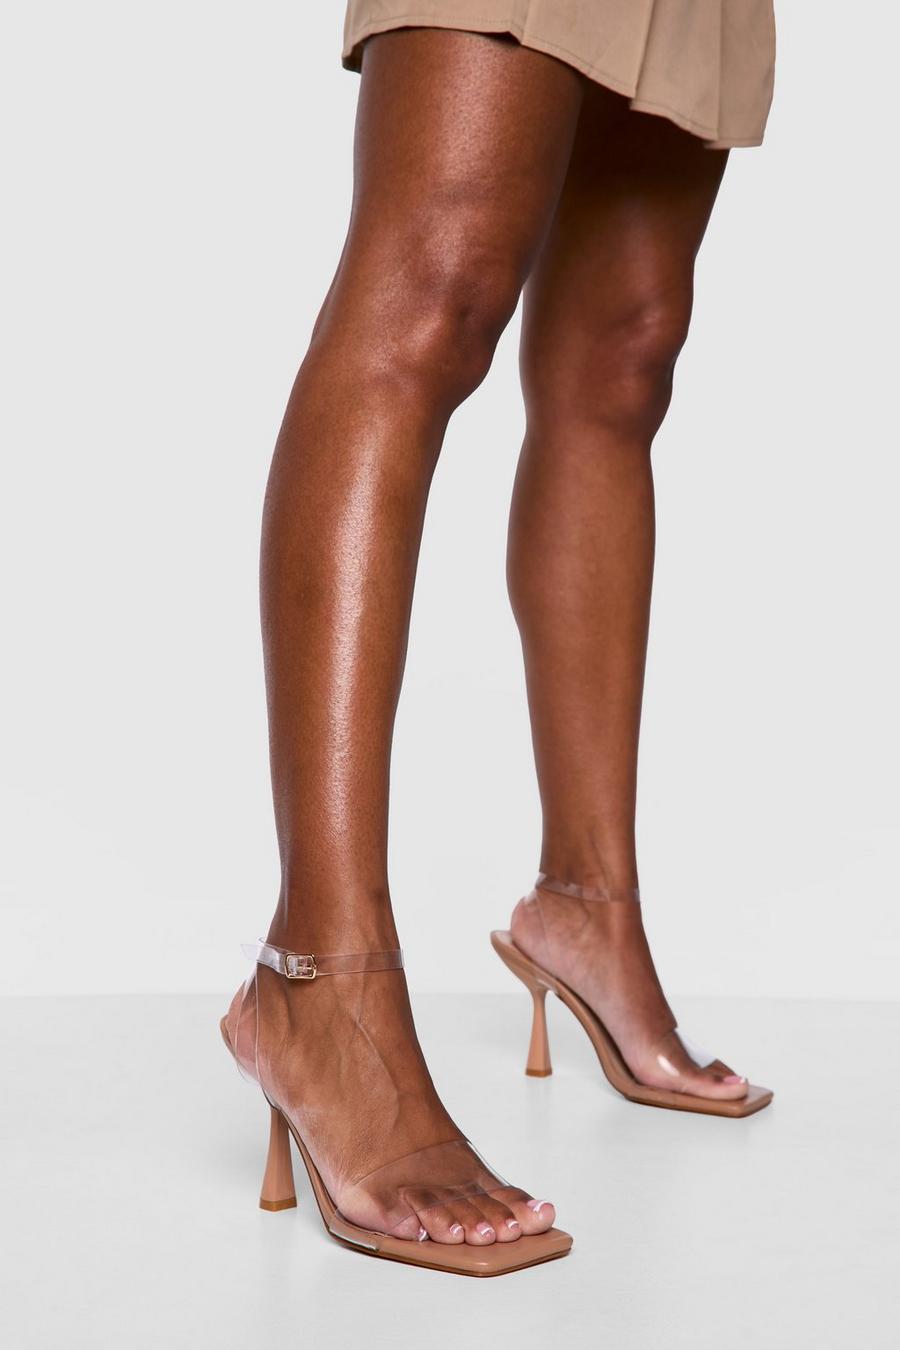 Sandali Mules a calzata ampia a punta quadrata con fascette trasparenti e tacco, Nude